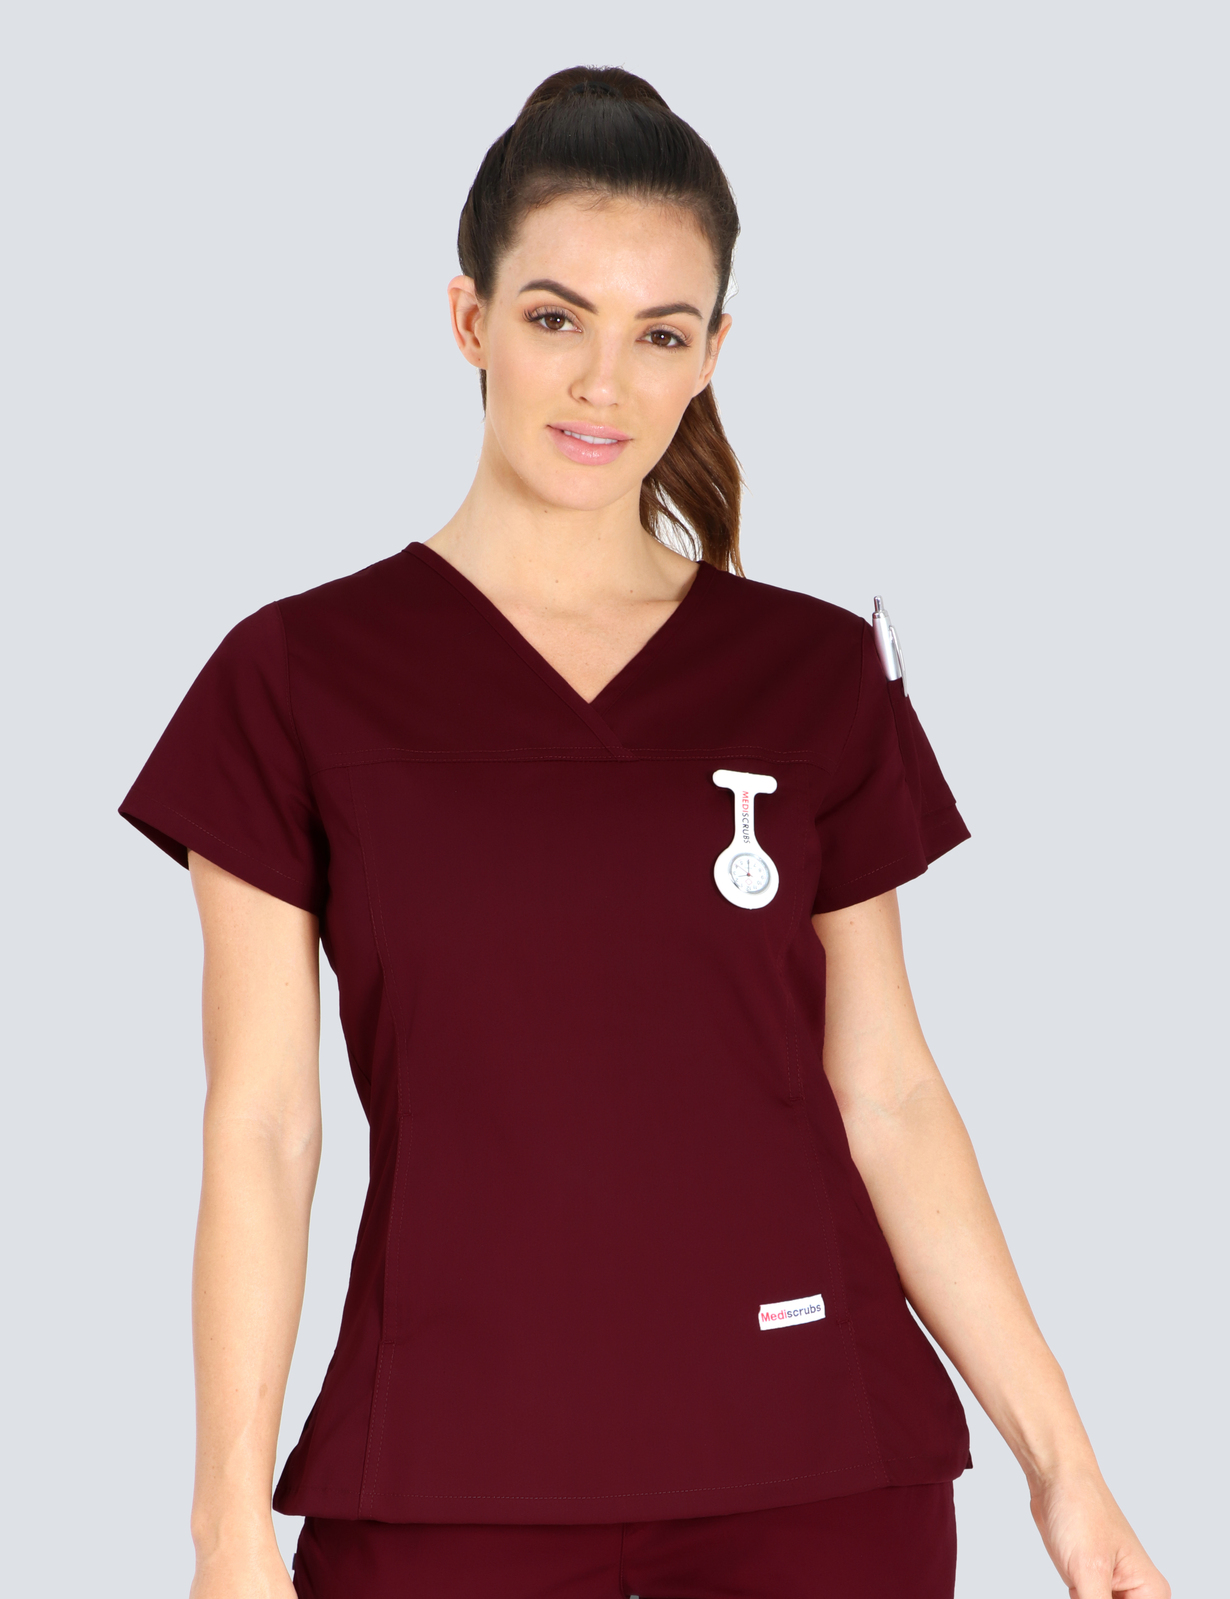 Queensland Children's Hospital Emergency Department Clinical Facilitator Uniform Top Bundle  (Women's Fit Top in Burgundy incl Logos)